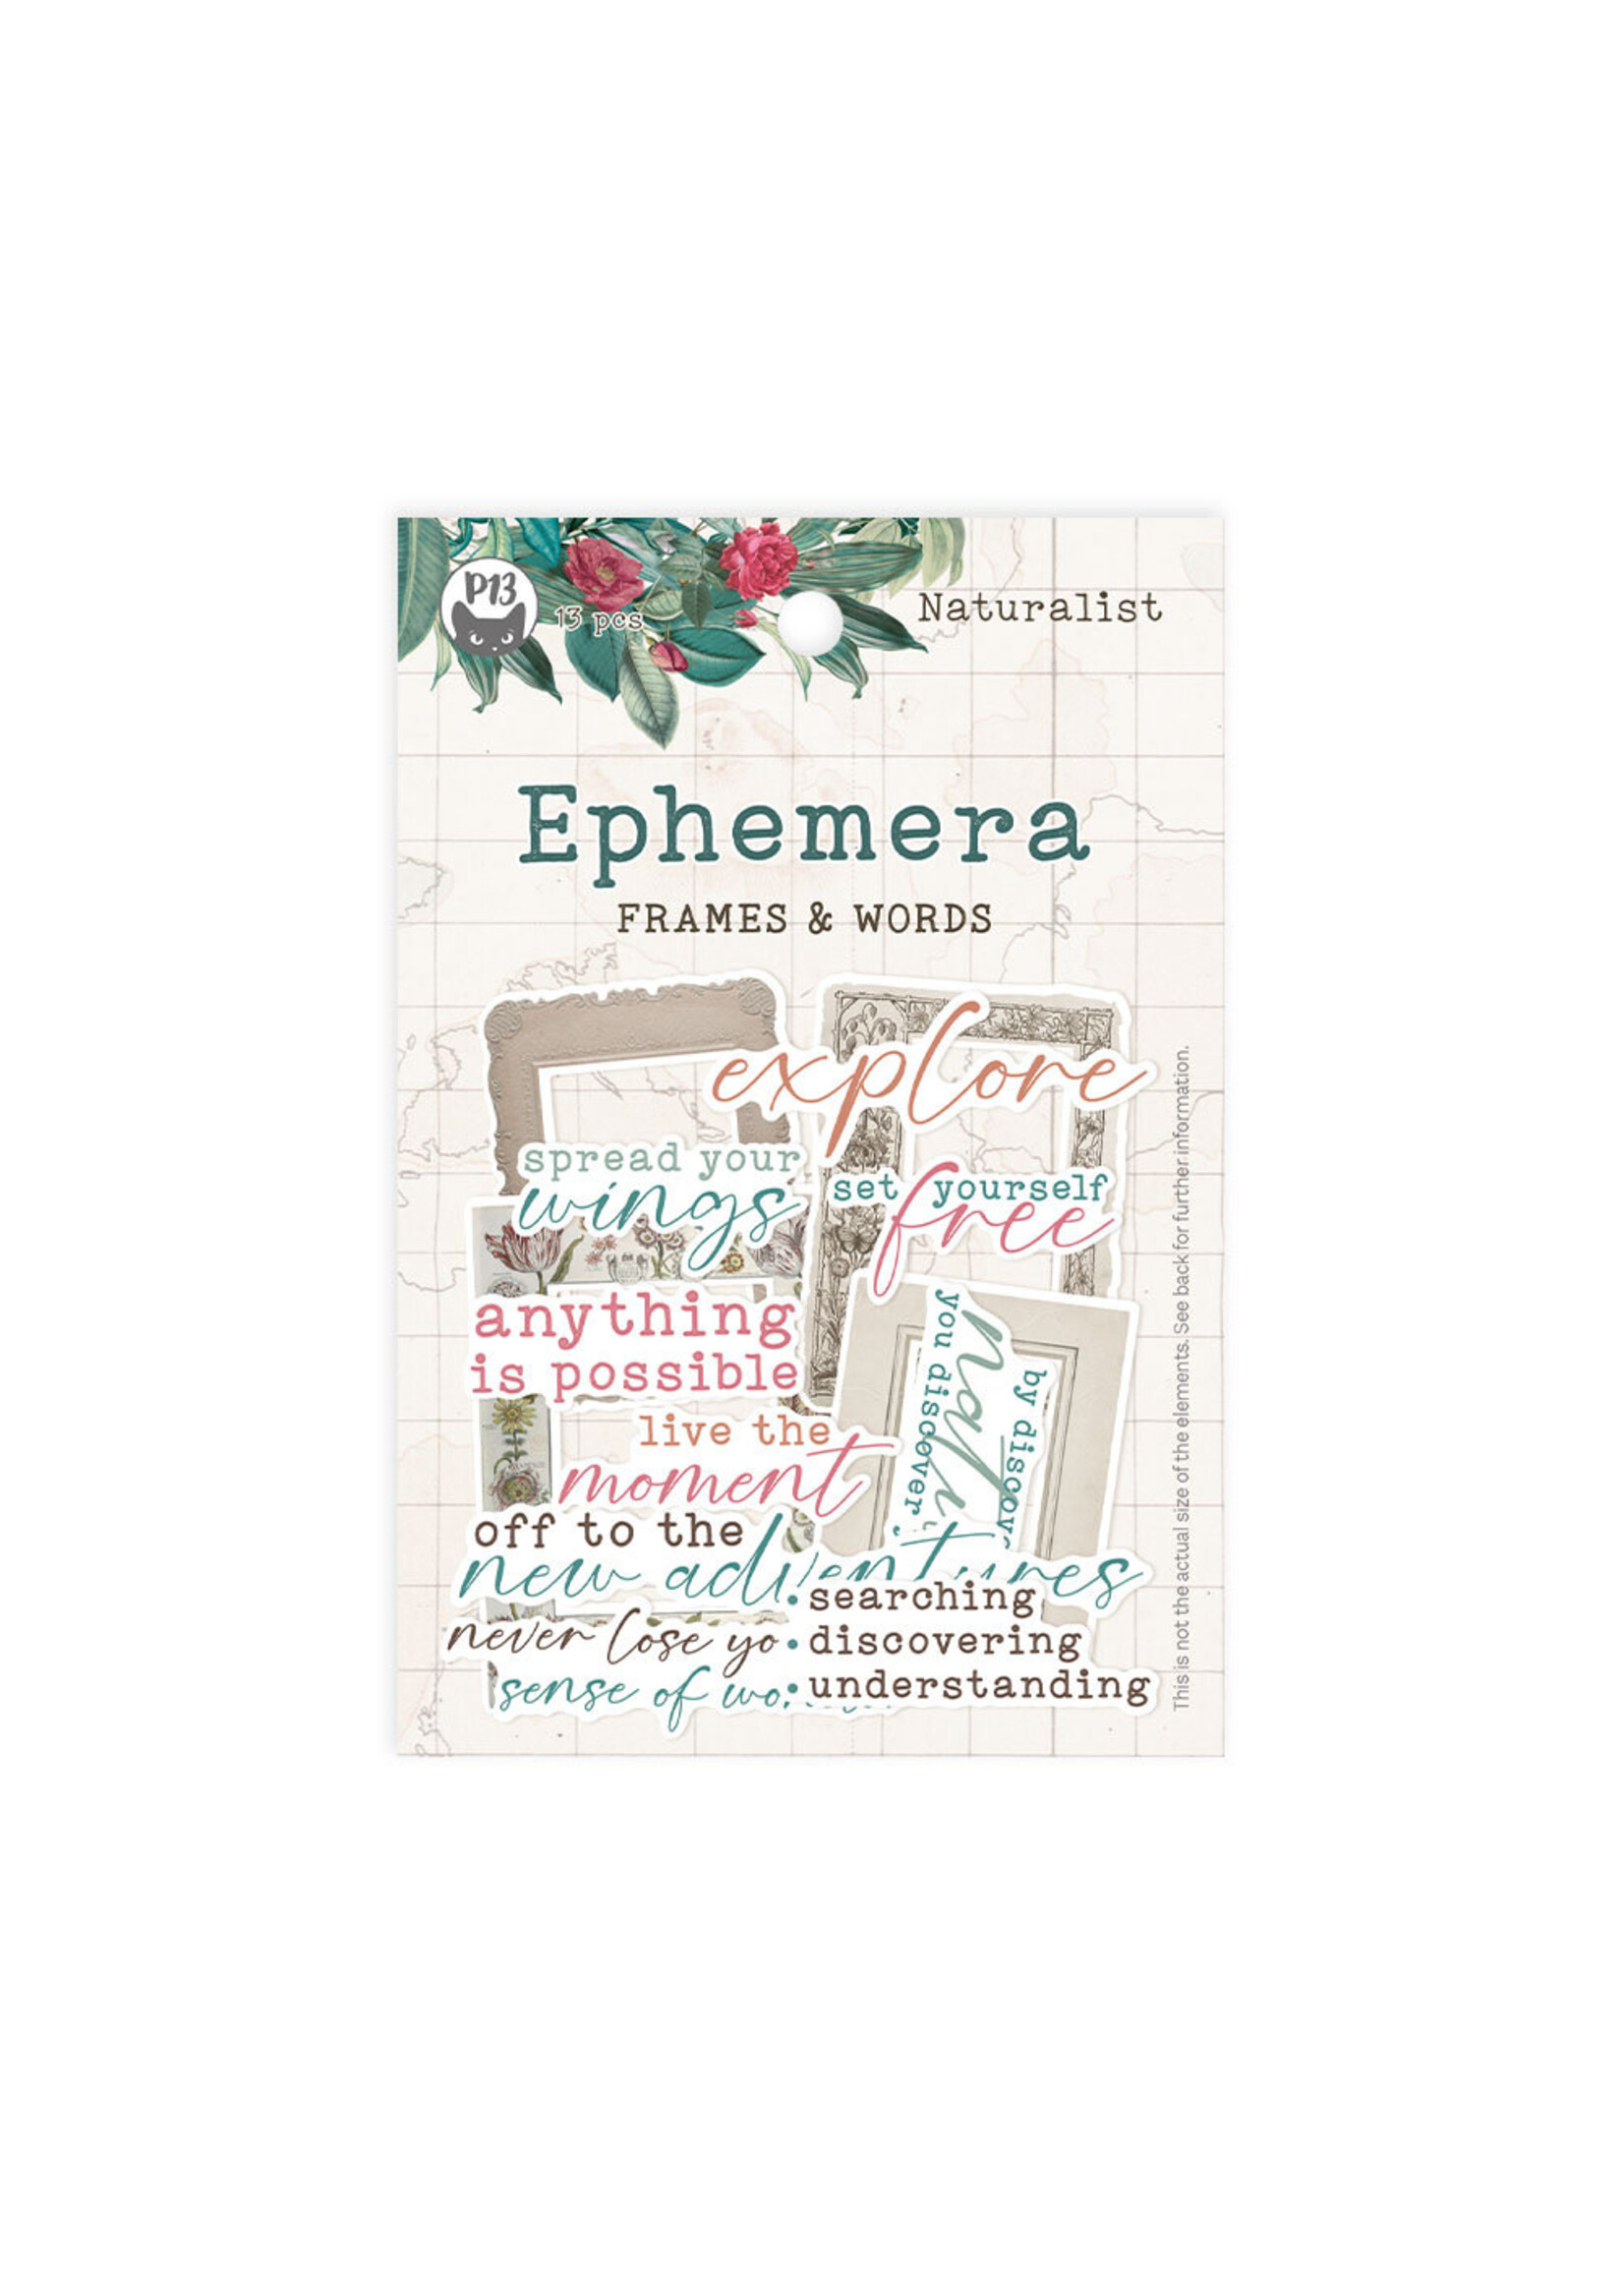 Ephemera, Naturalist - Frames & Words